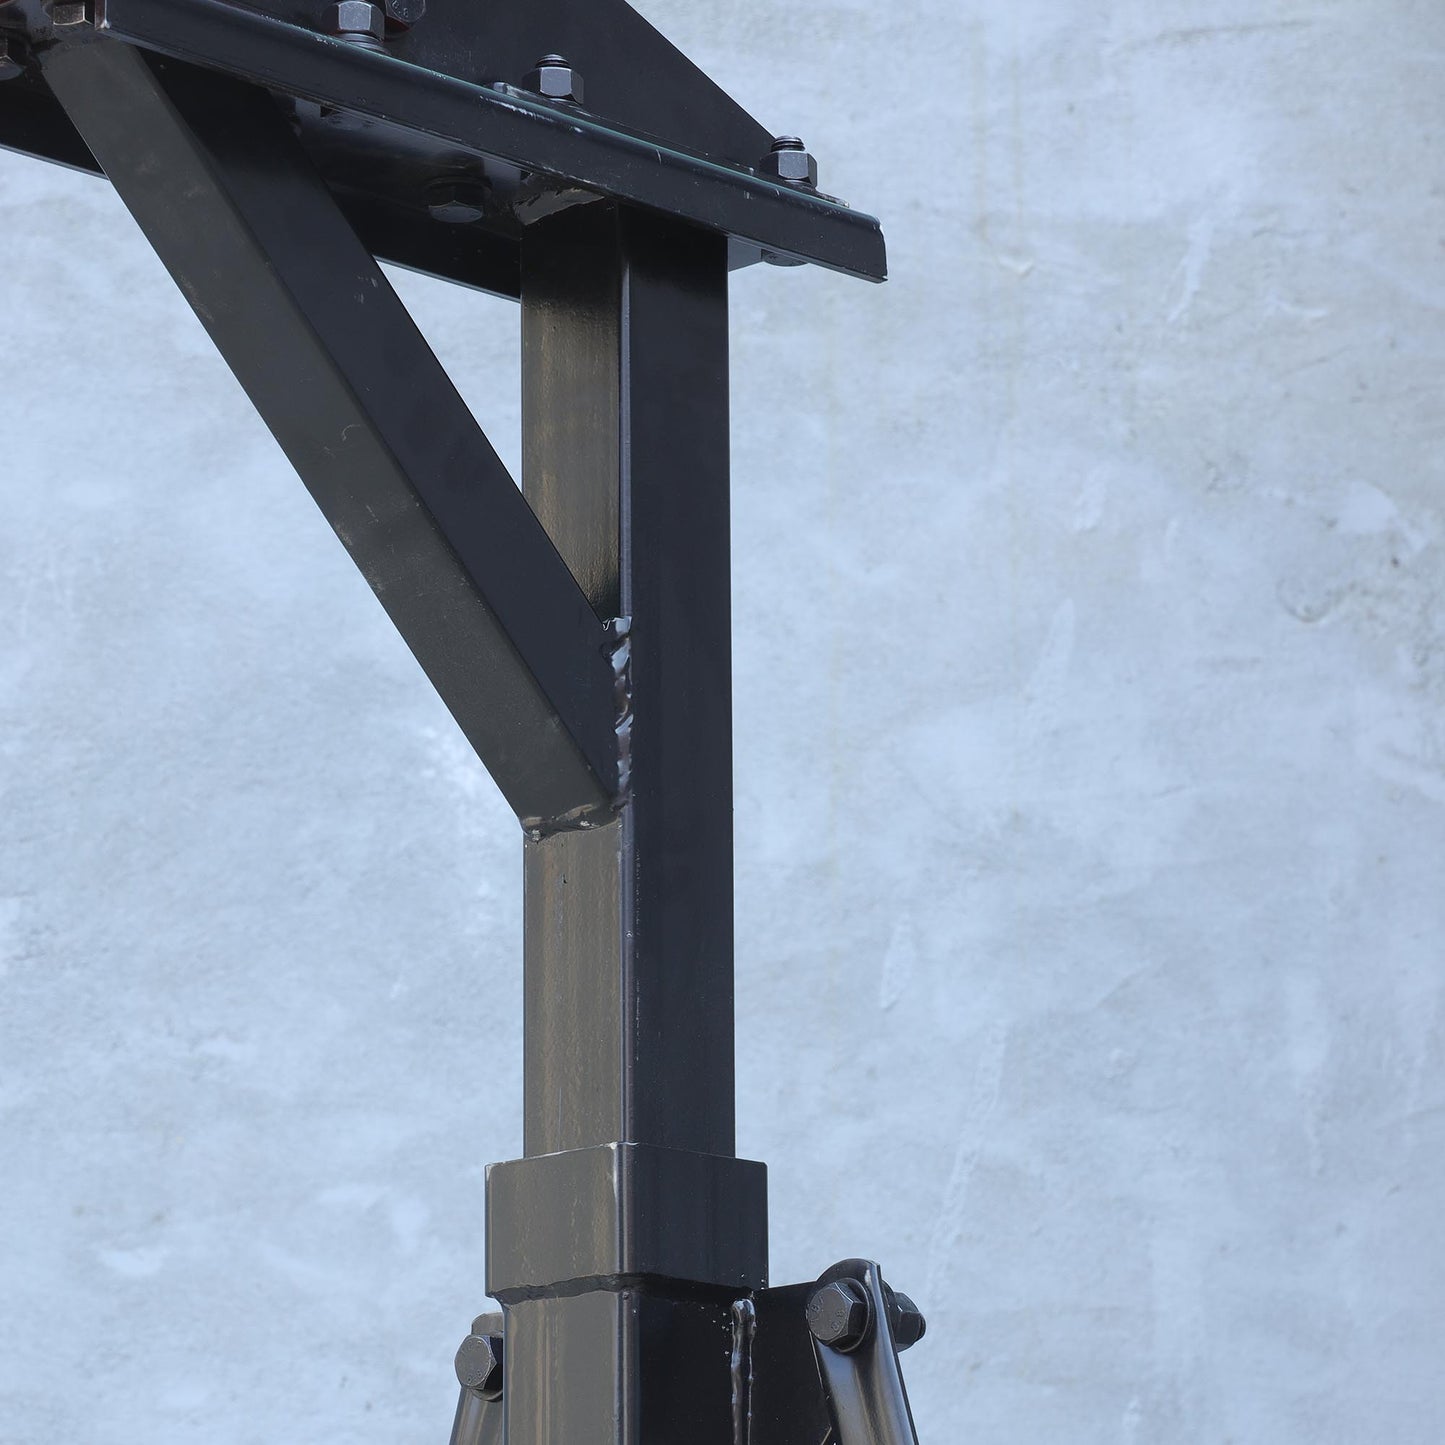 Adjustable Gantry Crane System 1 Ton with Lifting kit , Portable Shop Gantry Hoist Rated 2,000 LB, Portable Gantry Crane